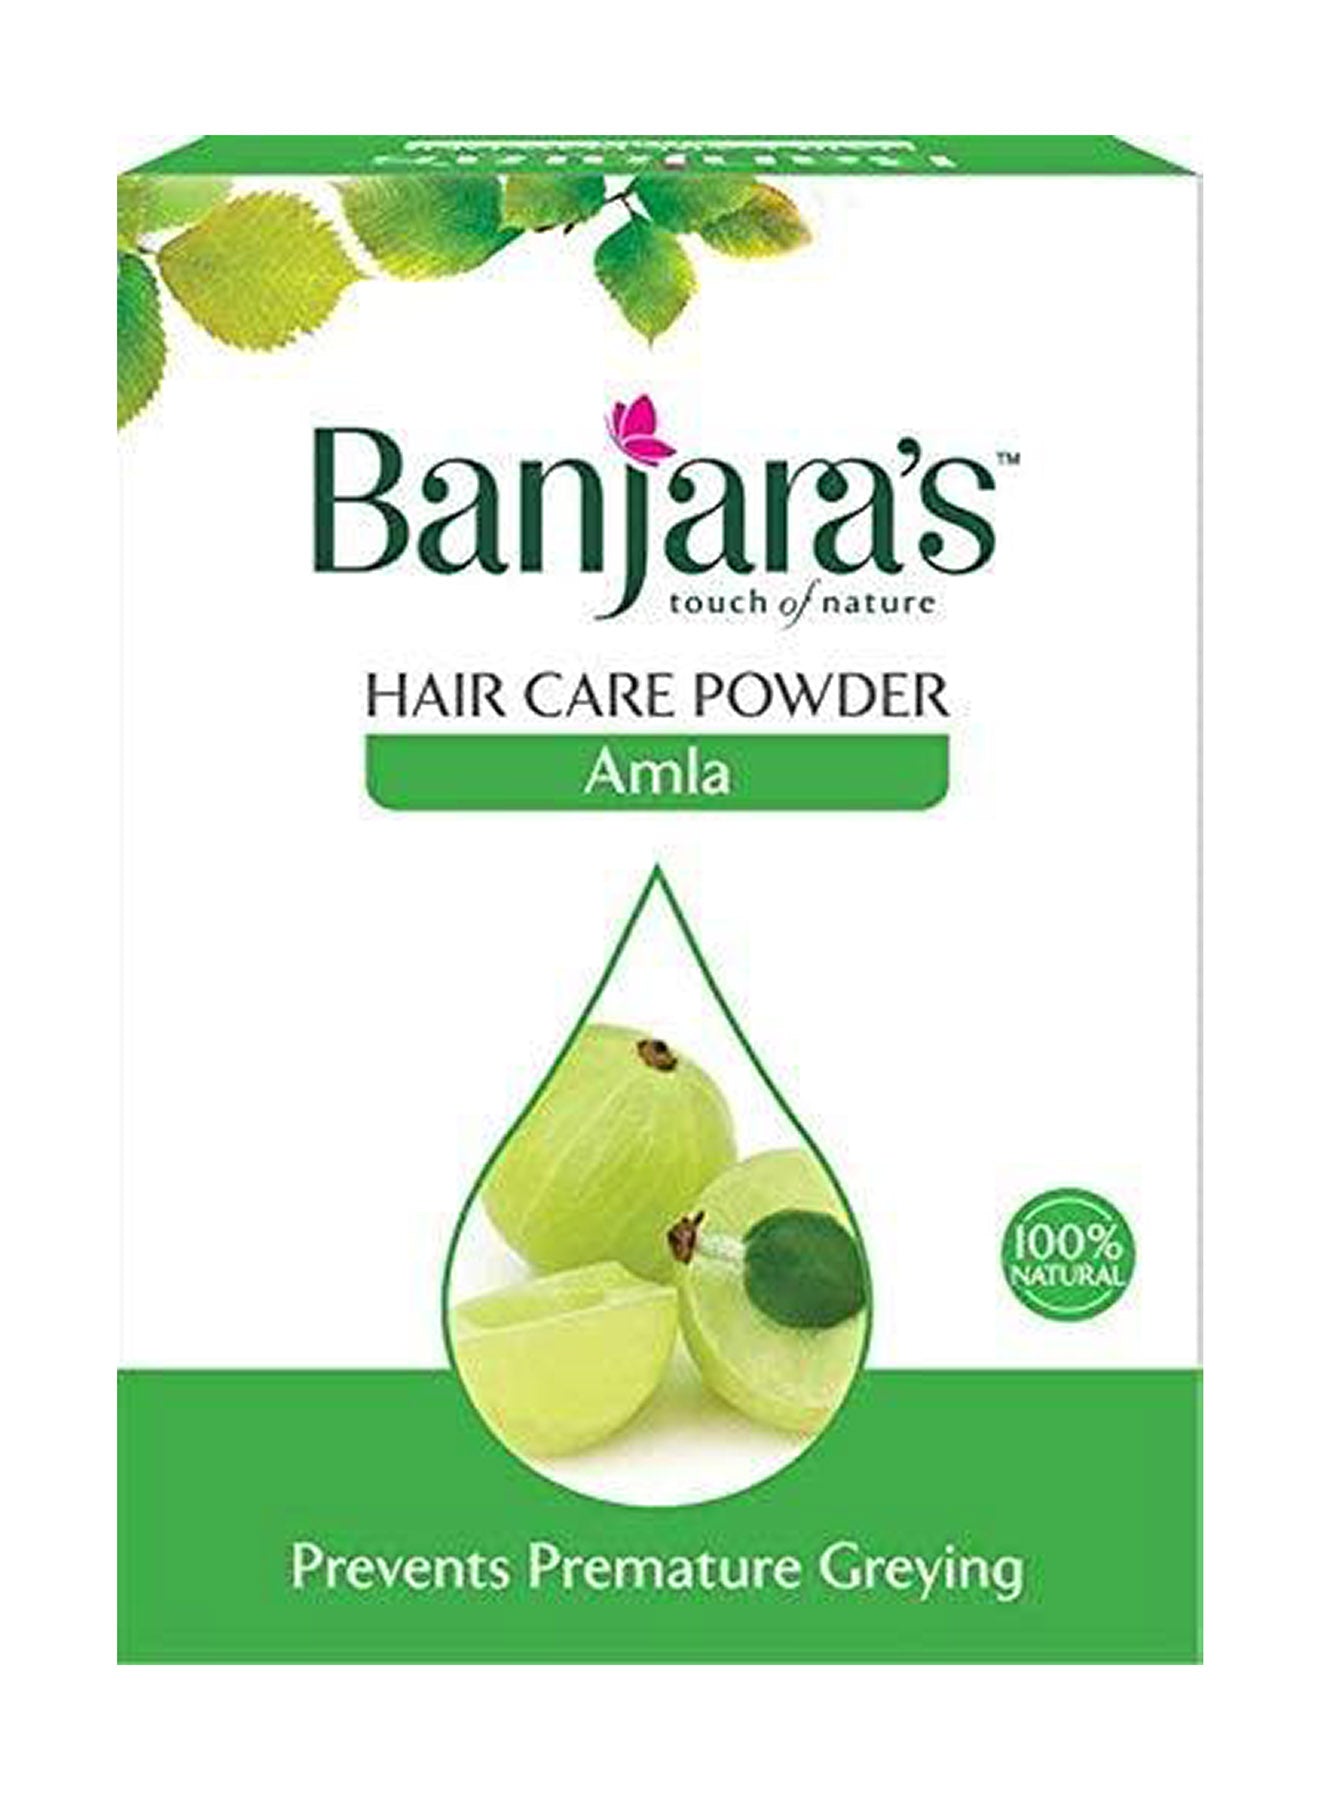 Banjaras Amla Hair Care Powder 100g